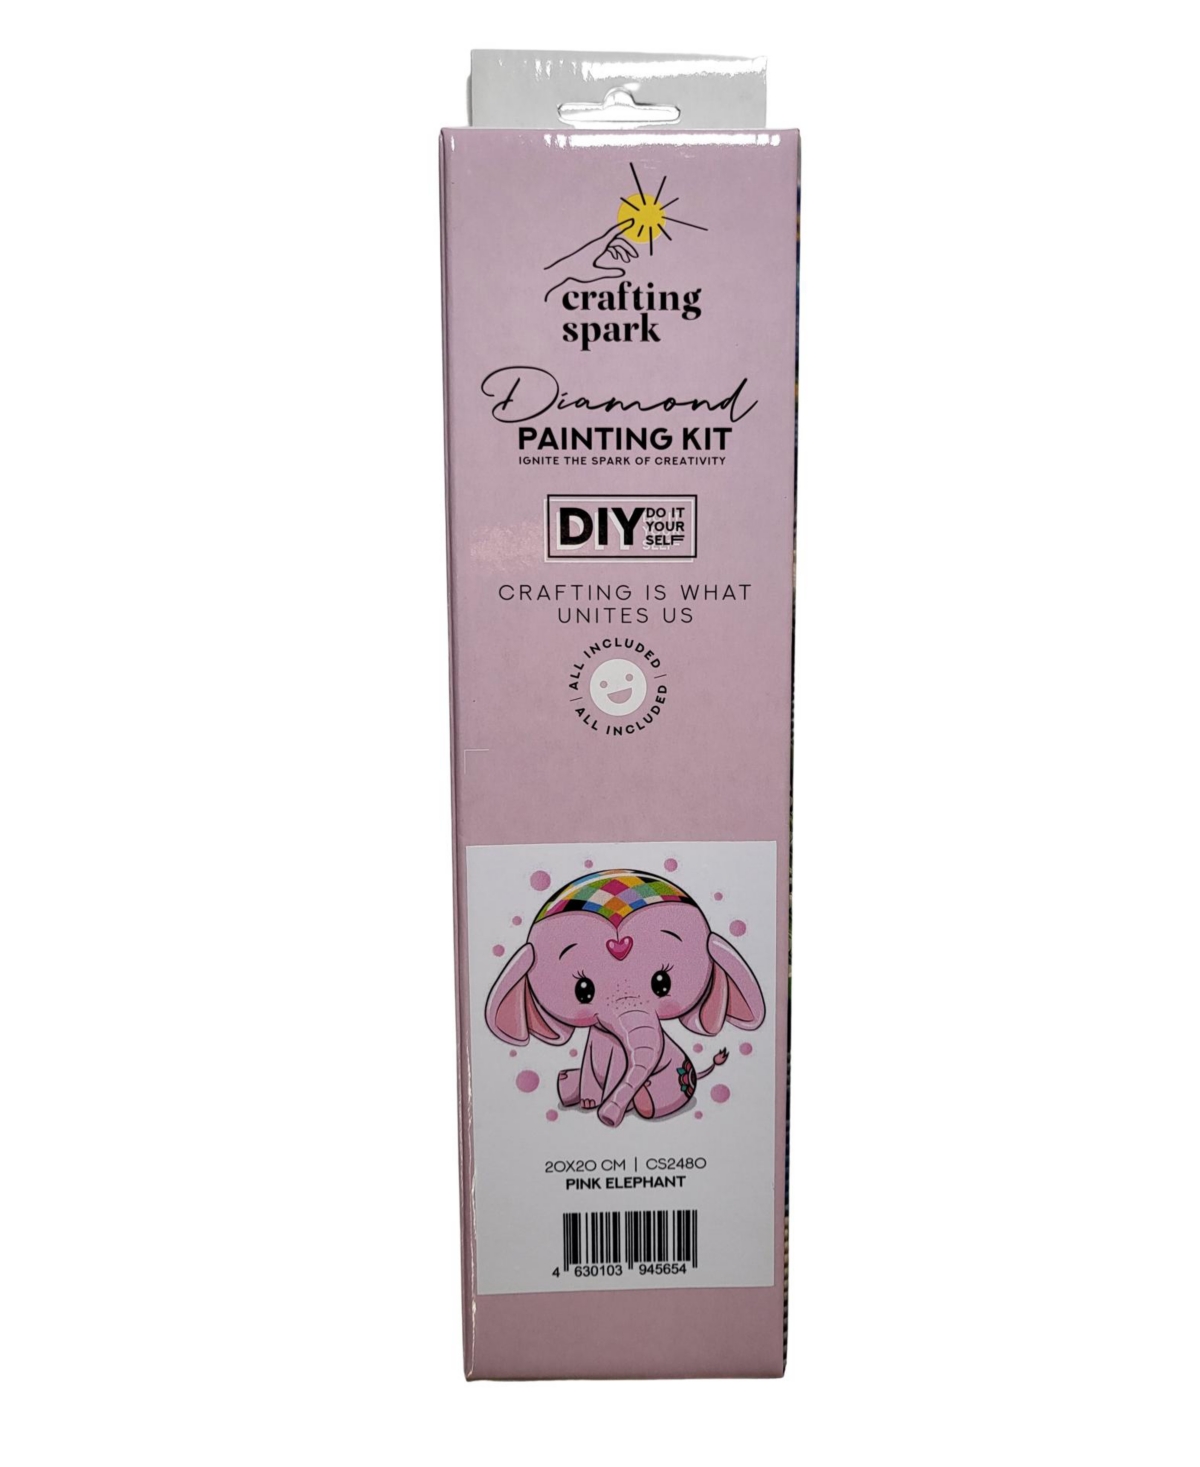 Crafting Spark Diamond Painting Kit Pink Elephant CS2480 7.9 x 7.9 inches